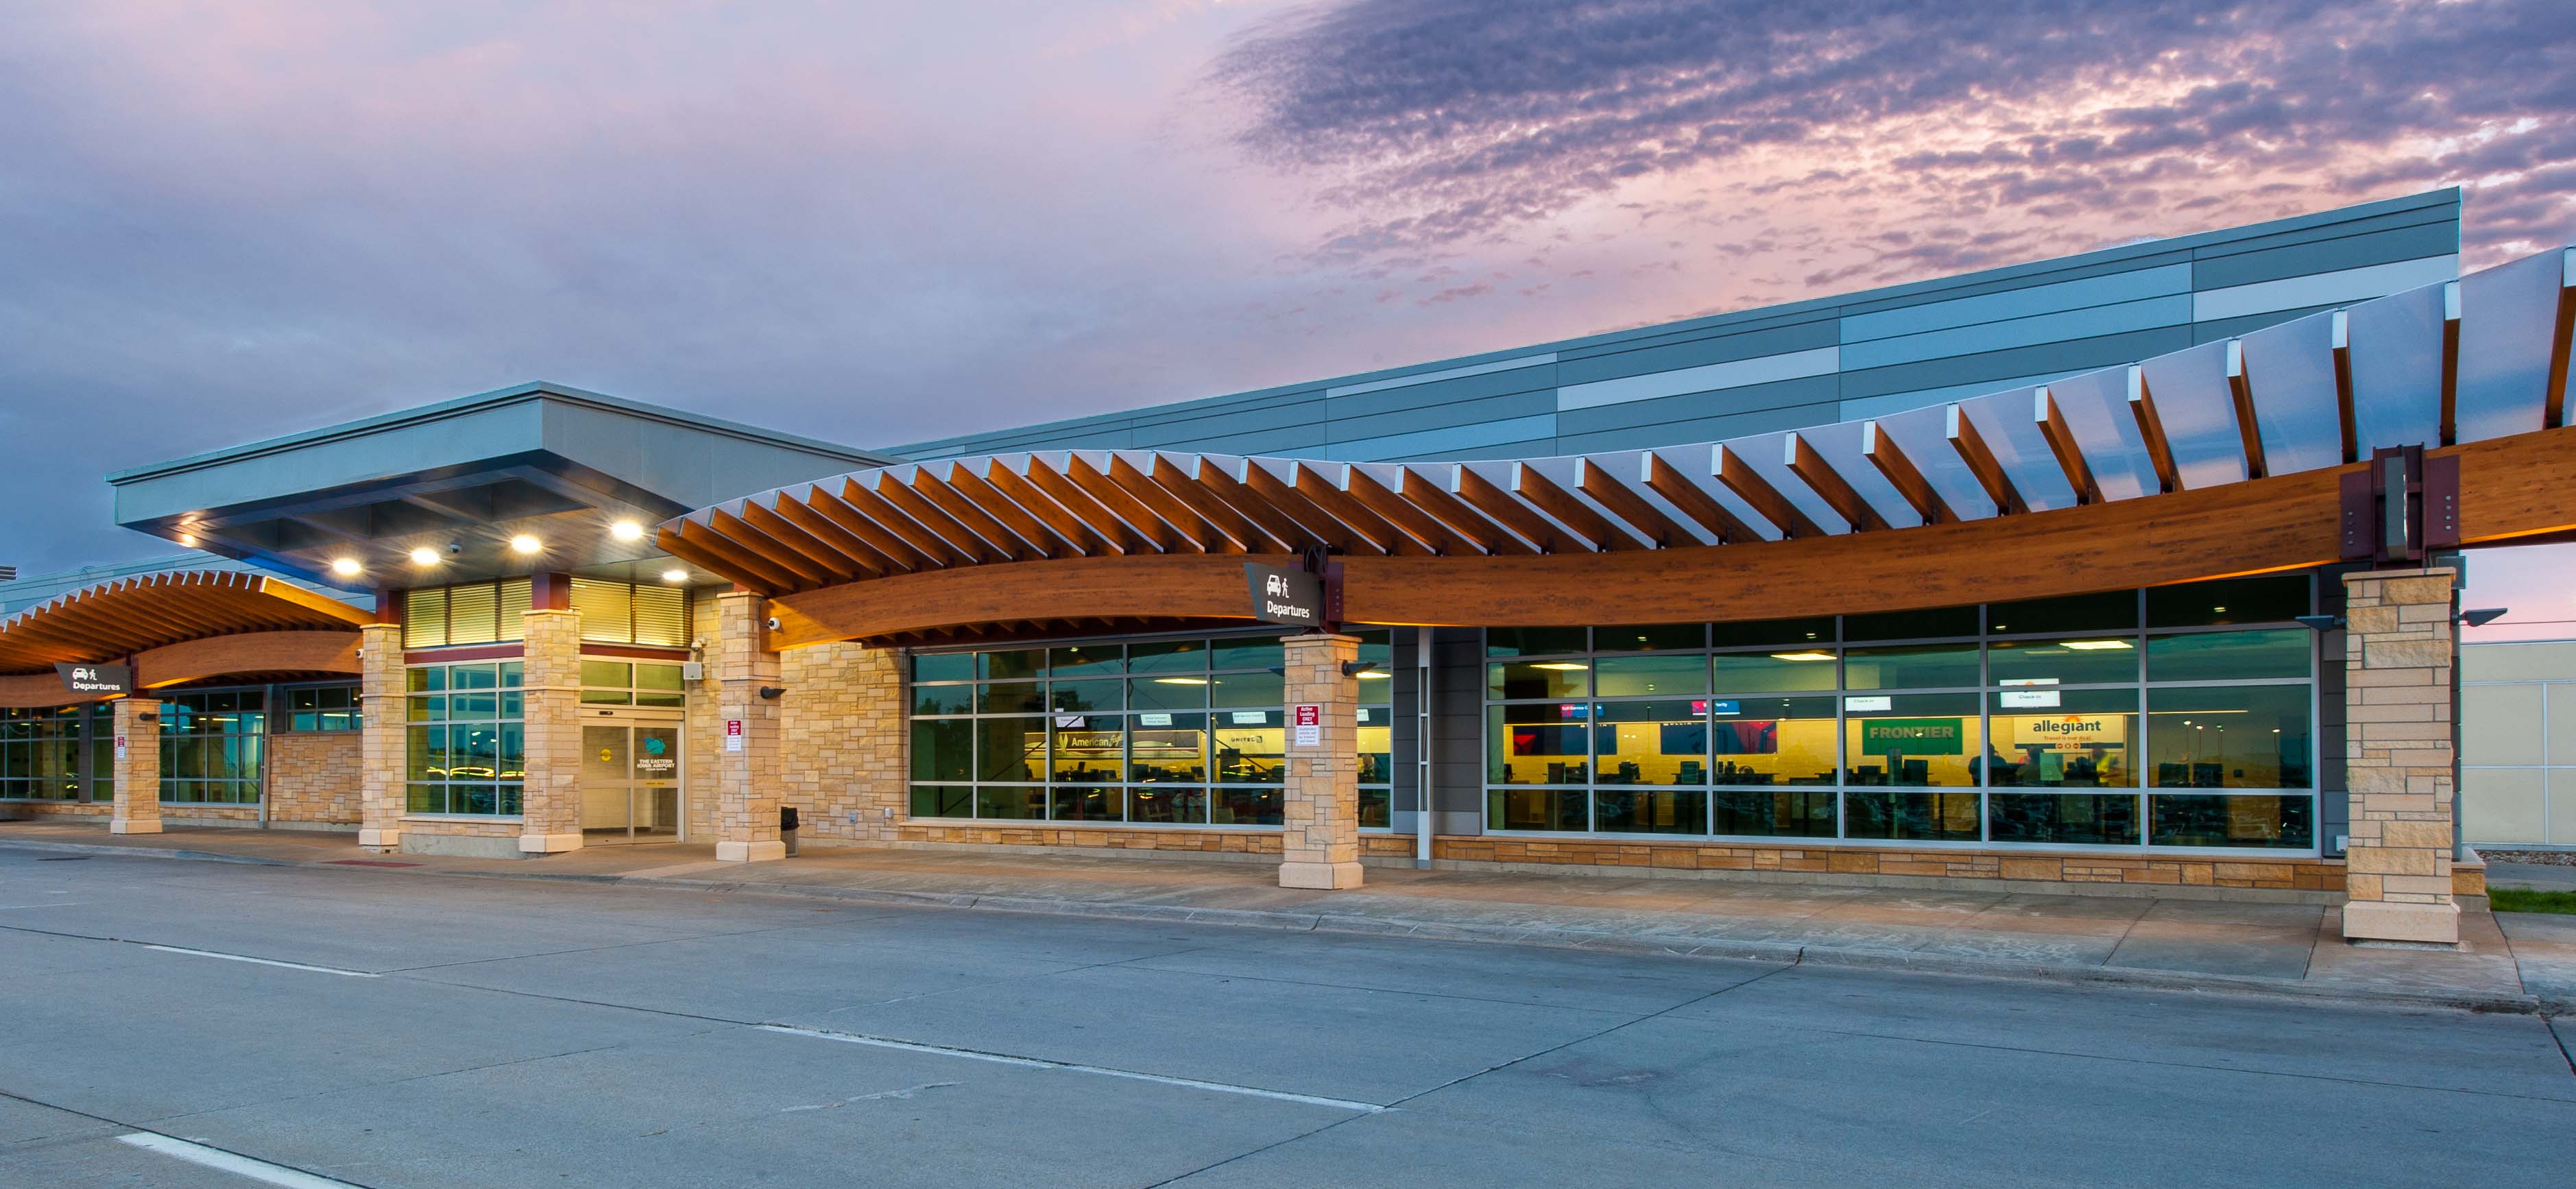 Duo-Gard's Sleekline Translucent Monolithic Canopy at Eastern Iowa Airport